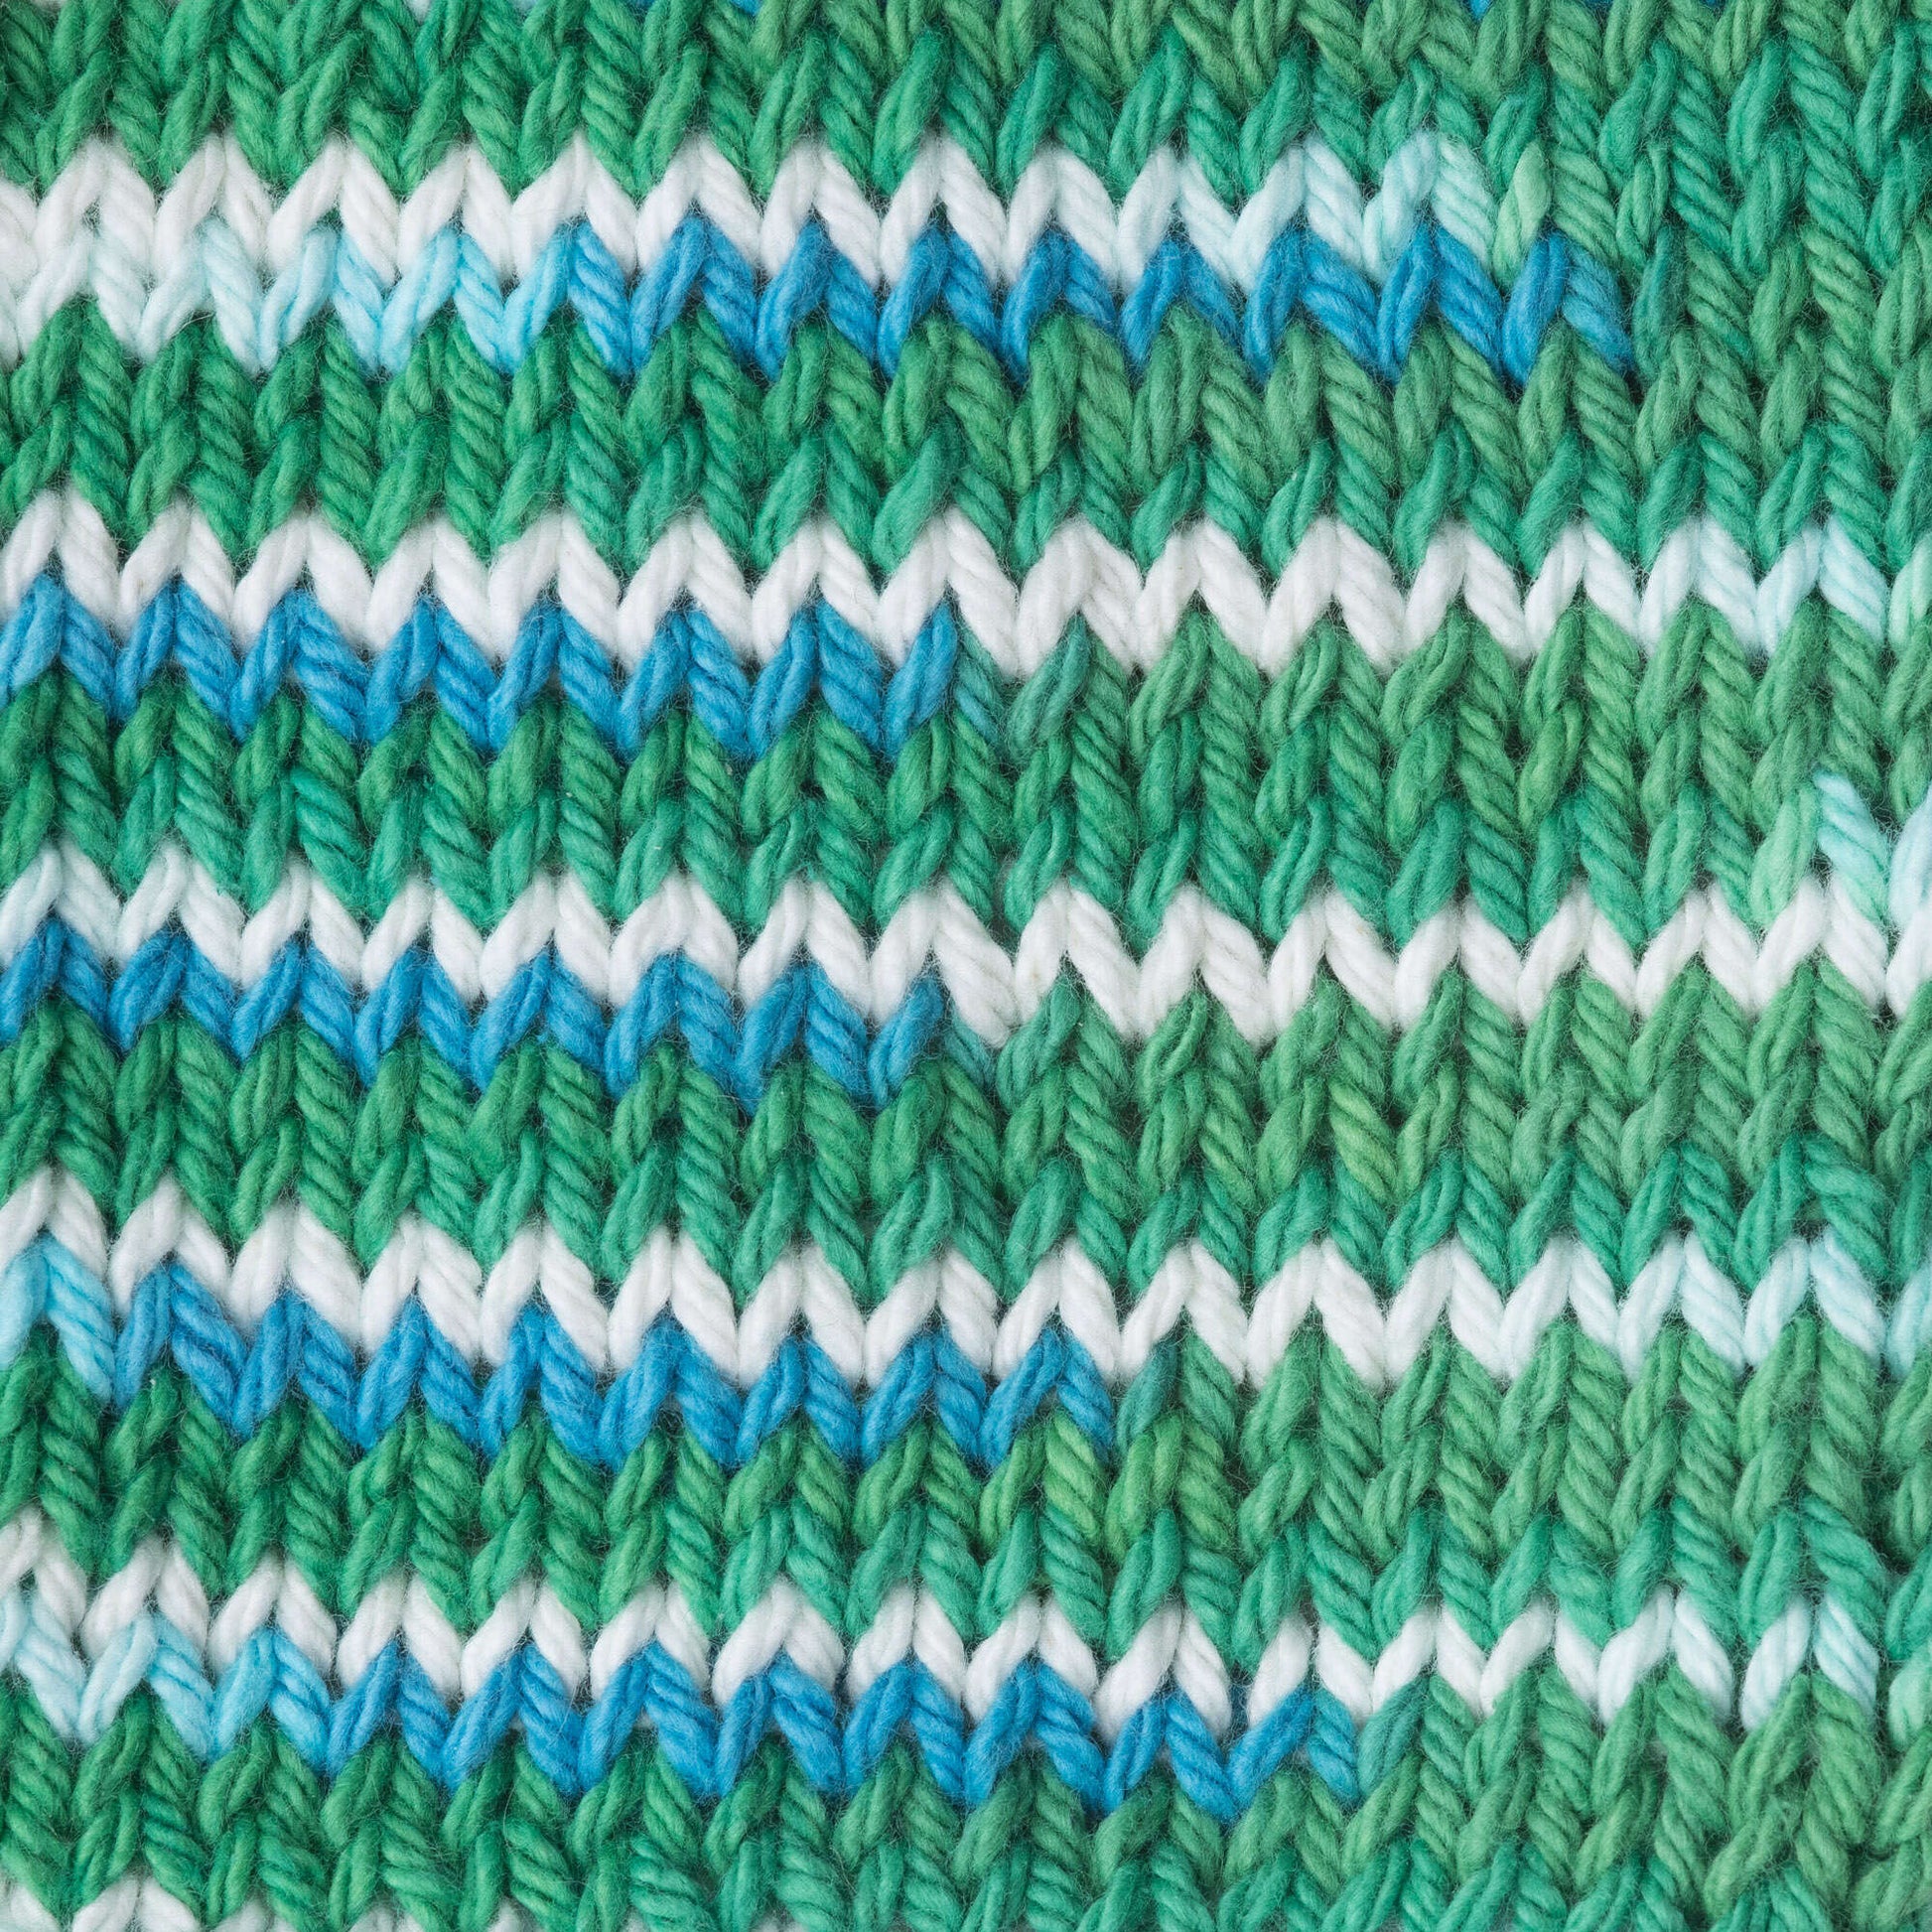 Bernat Handicrafter Cotton Ombres Yarn Emerald Energy Ombre